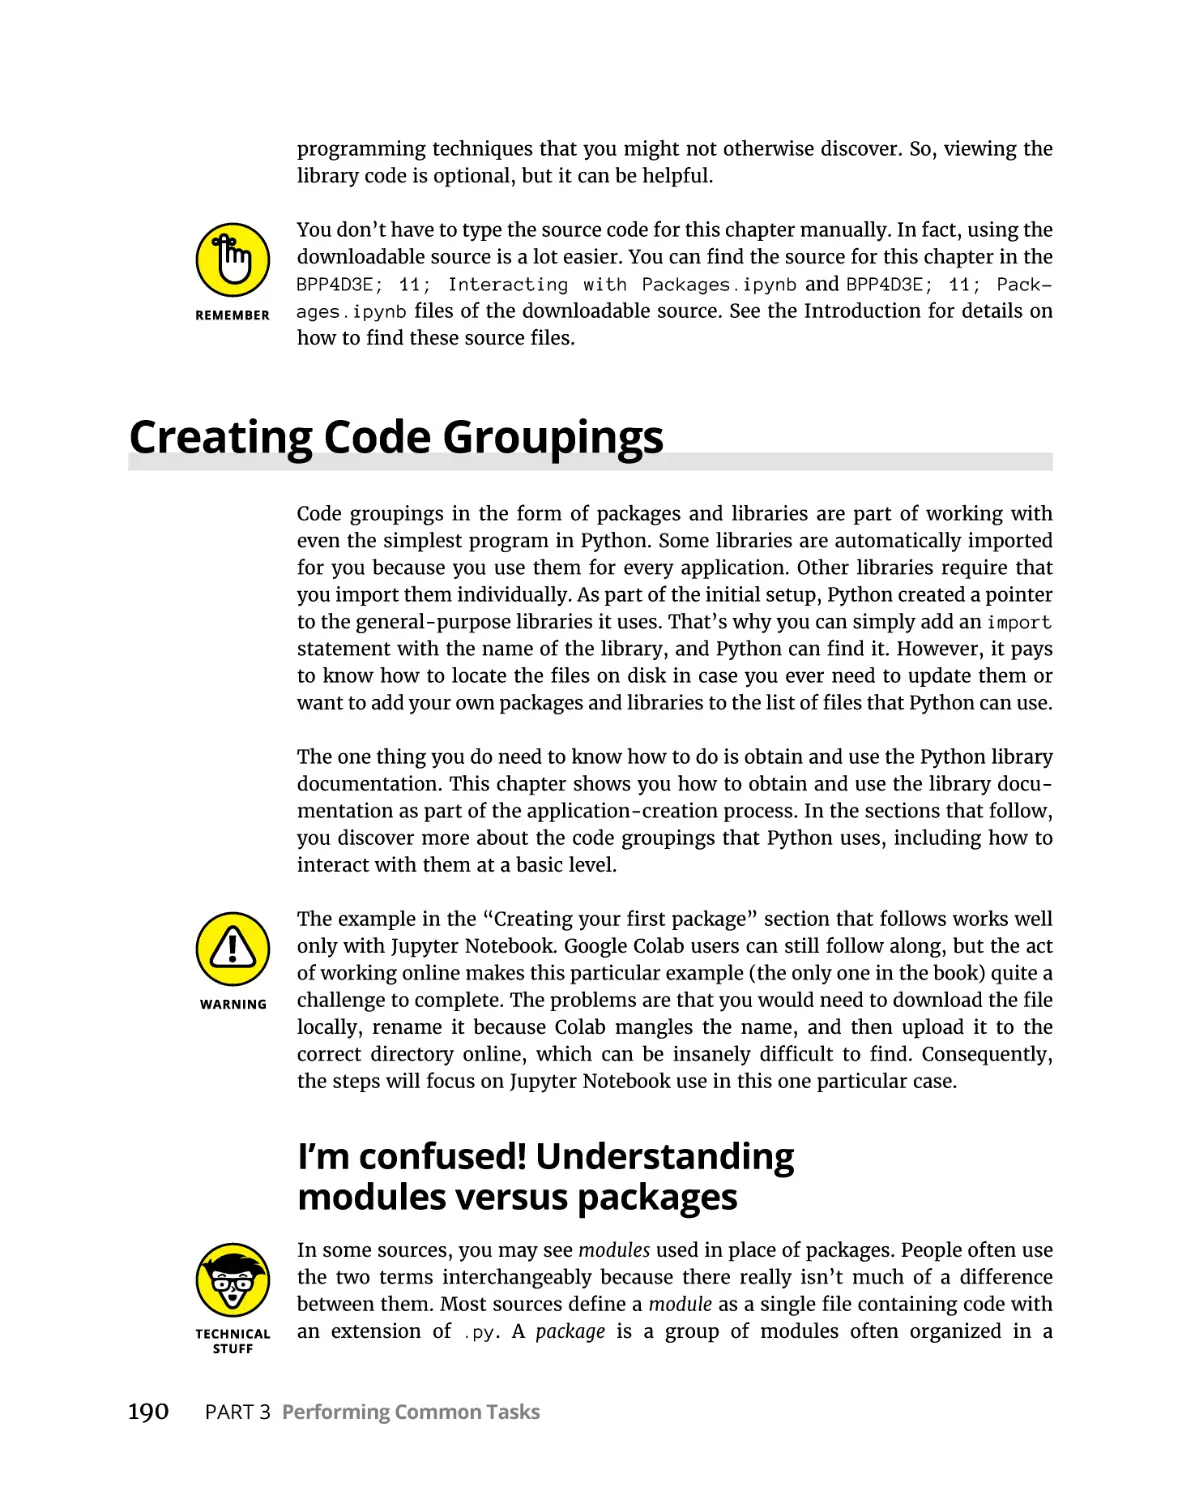 Creating Code Groupings
I’m confused! Understanding modules versus packages